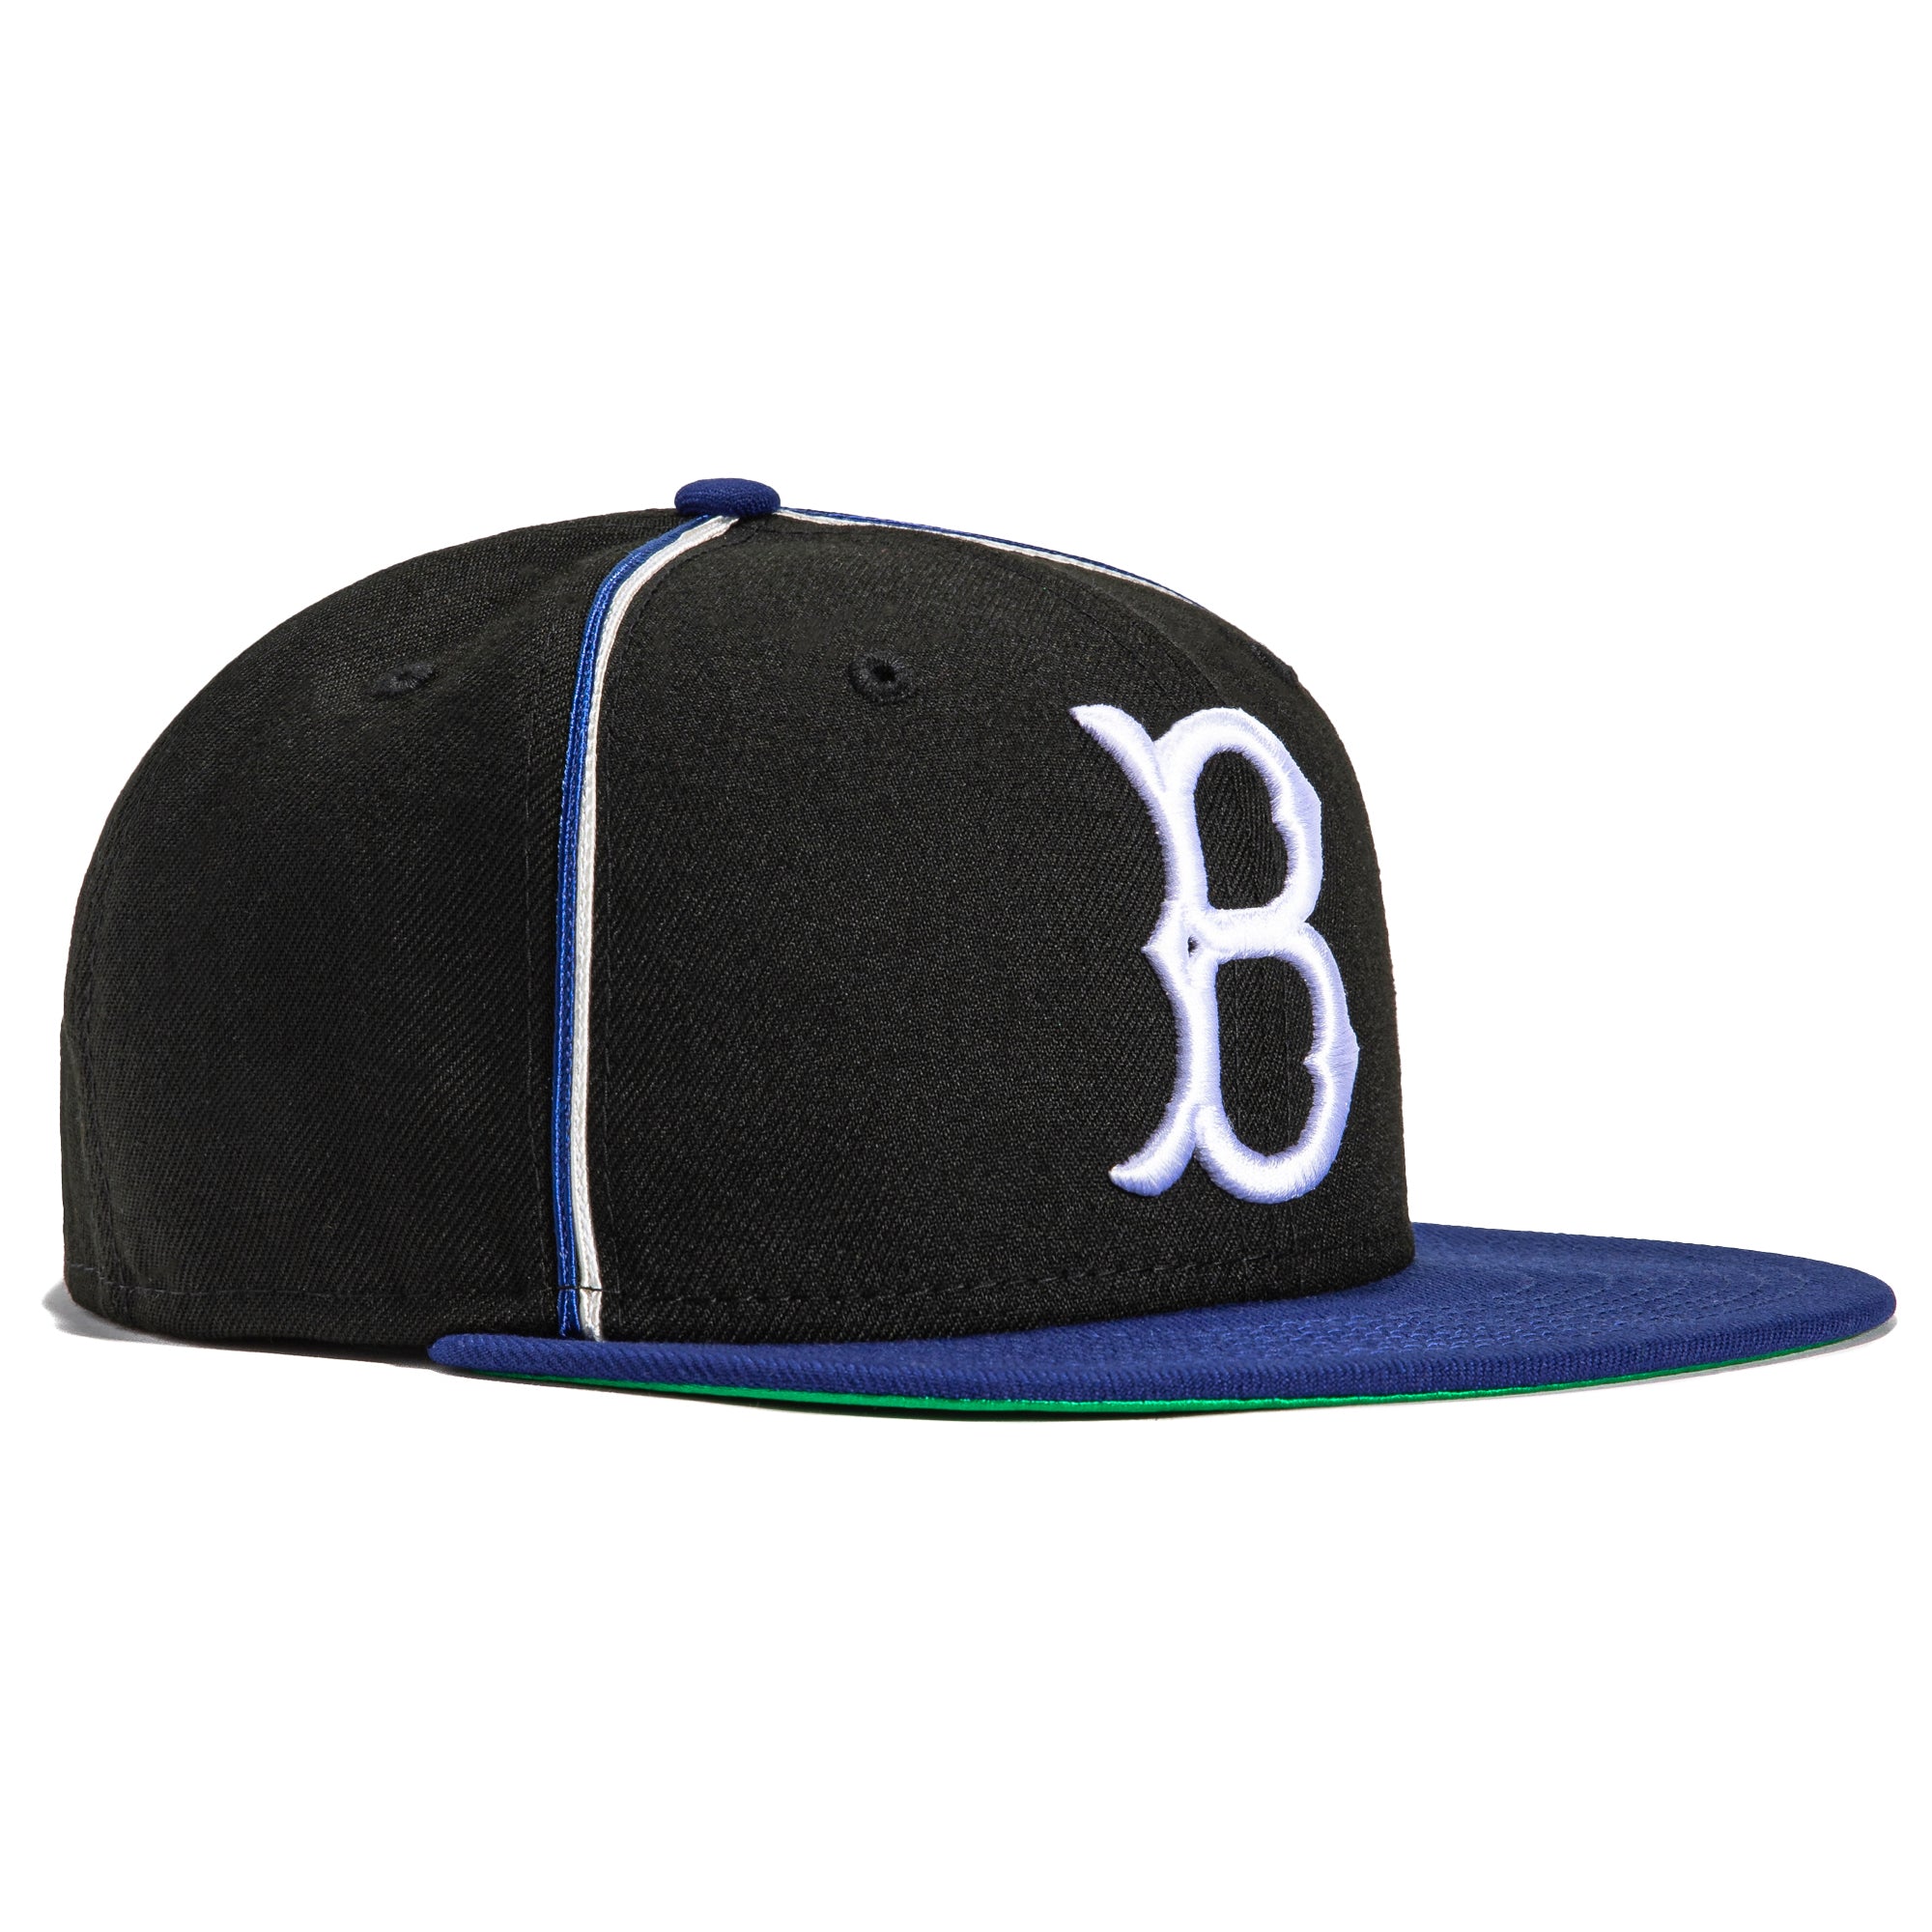 New Era 59FIFTY Black Soutache Brooklyn Dodgers Hat - Black, Royal Black / 8